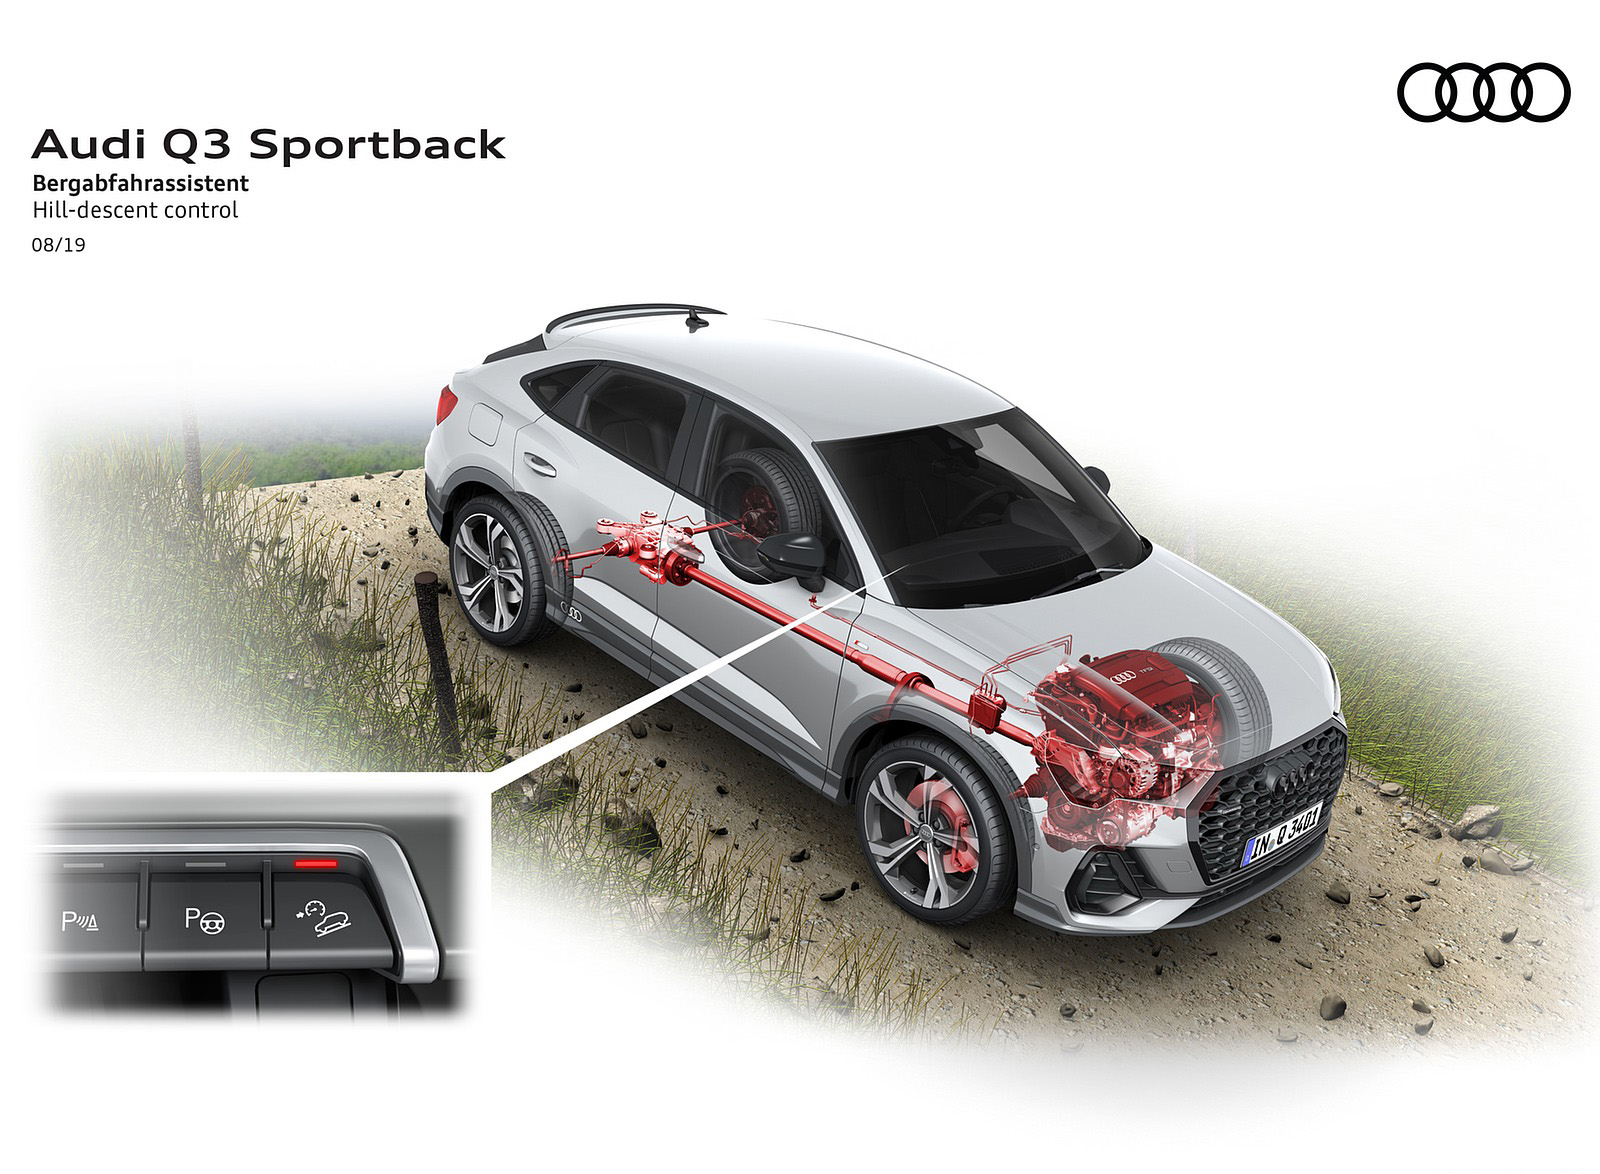 2020 Audi Q3 Sportback Hill-discent control Wallpapers #281 of 285